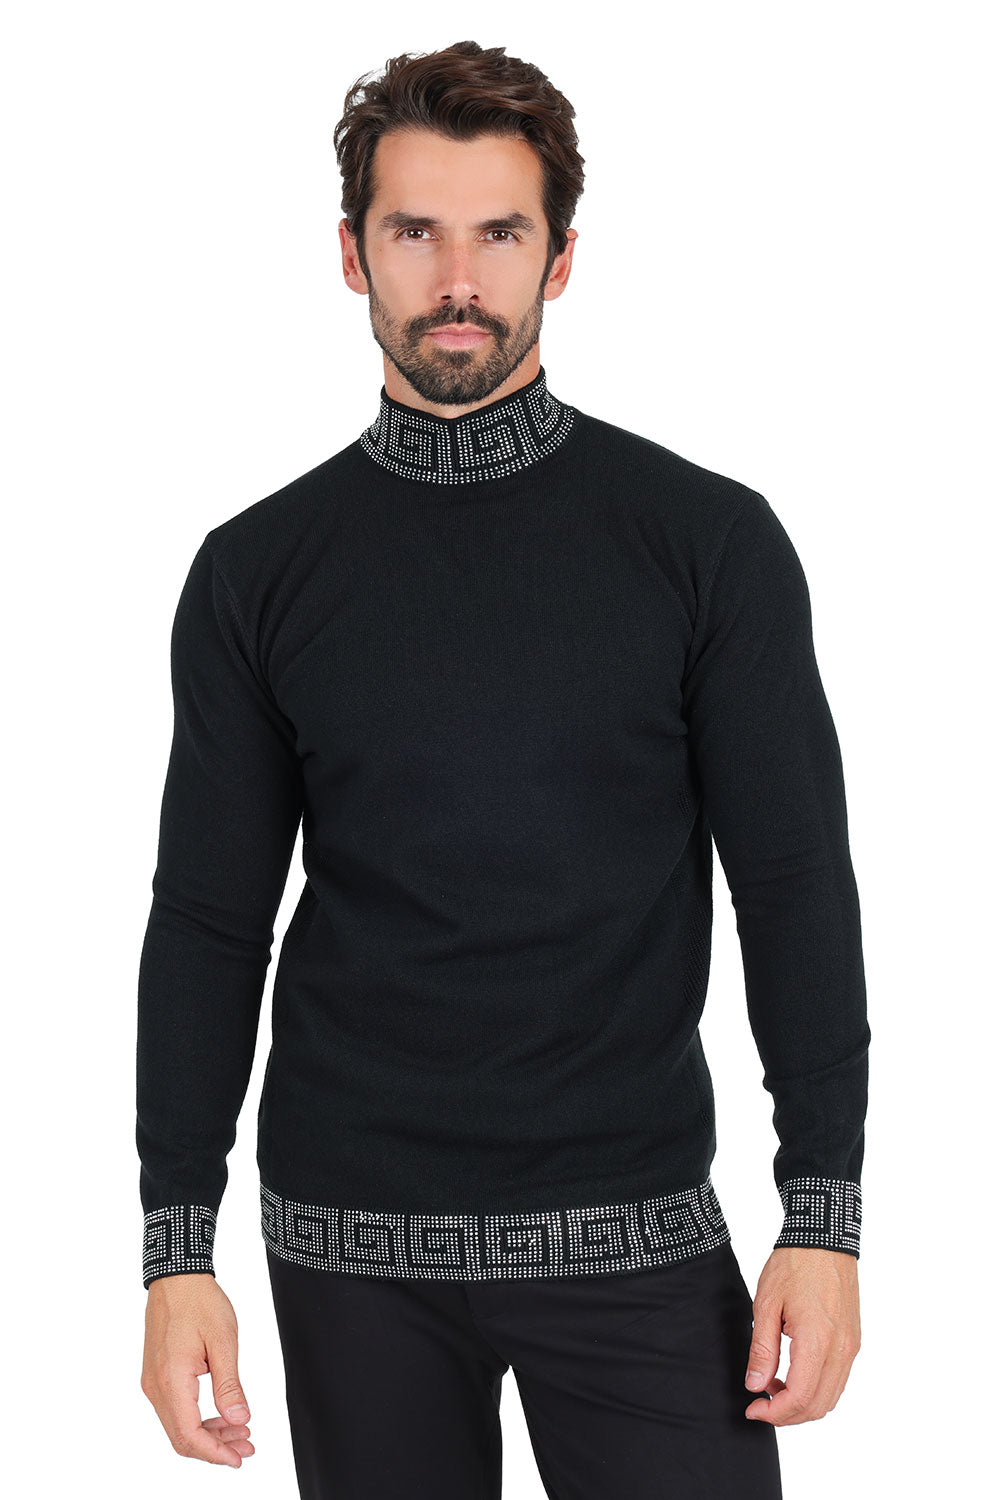 Barabas Men's Rhinestones Greek Key Pattern Turtleneck Sweater 2LS2106 Black Silver